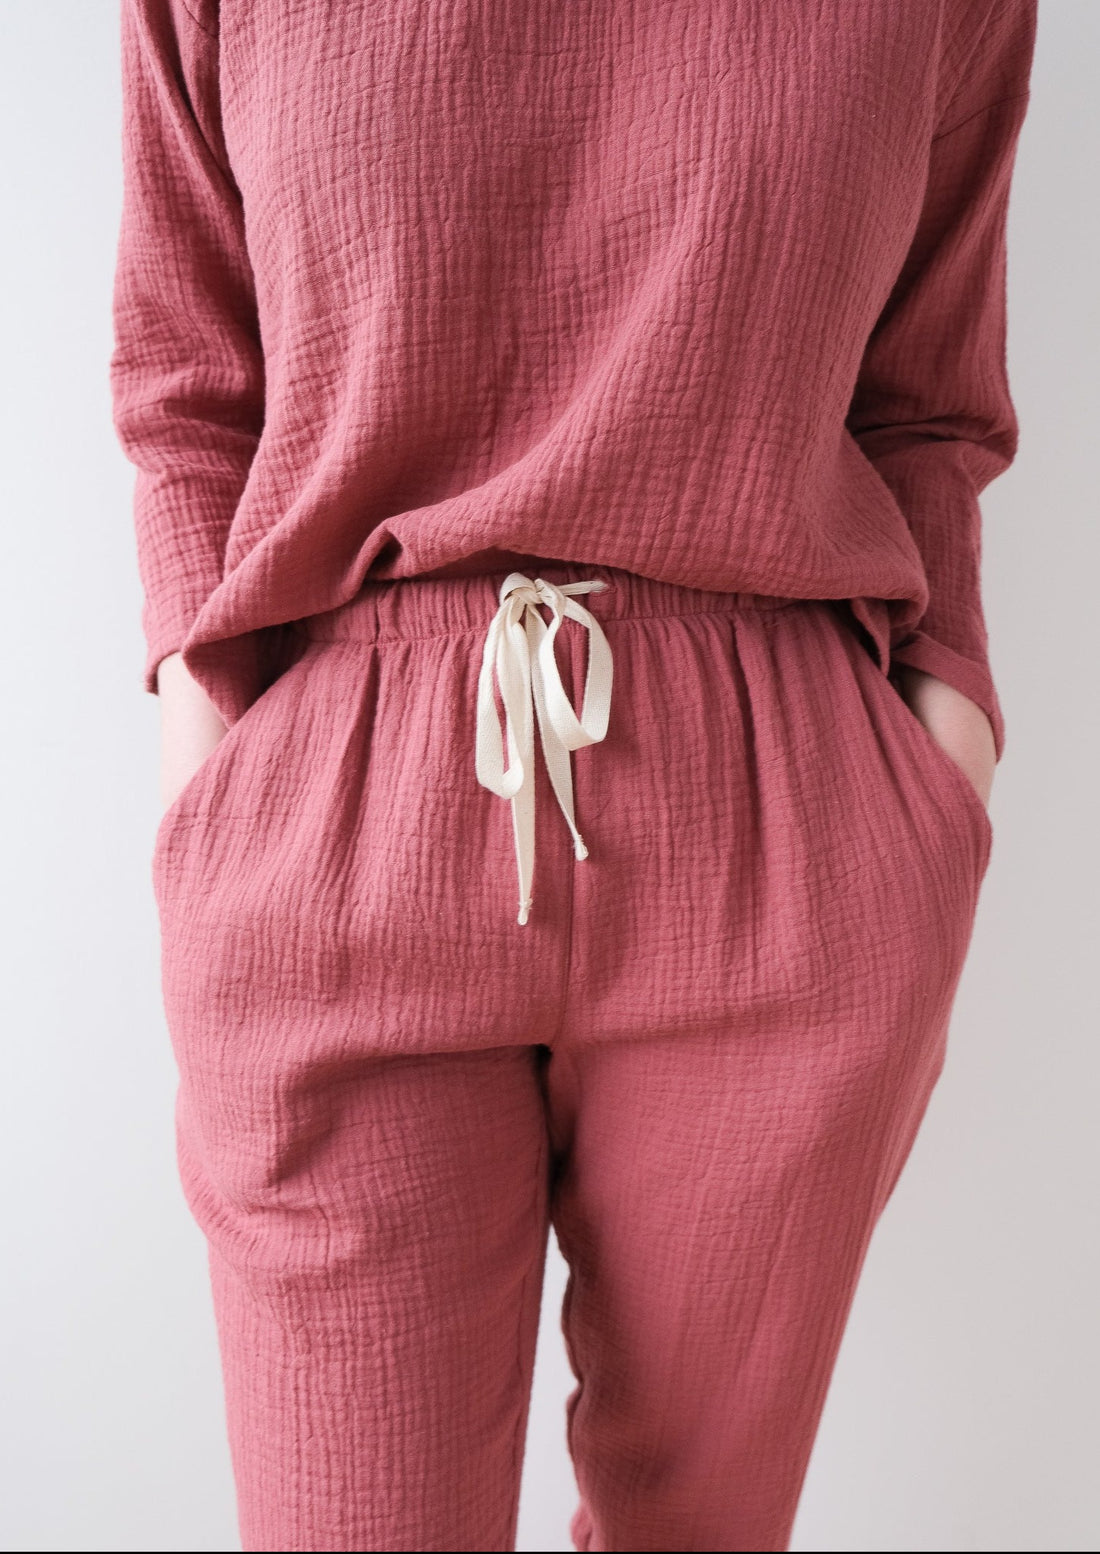 Pantalon de pyjama No5802w, coton gaufré sable, 4x